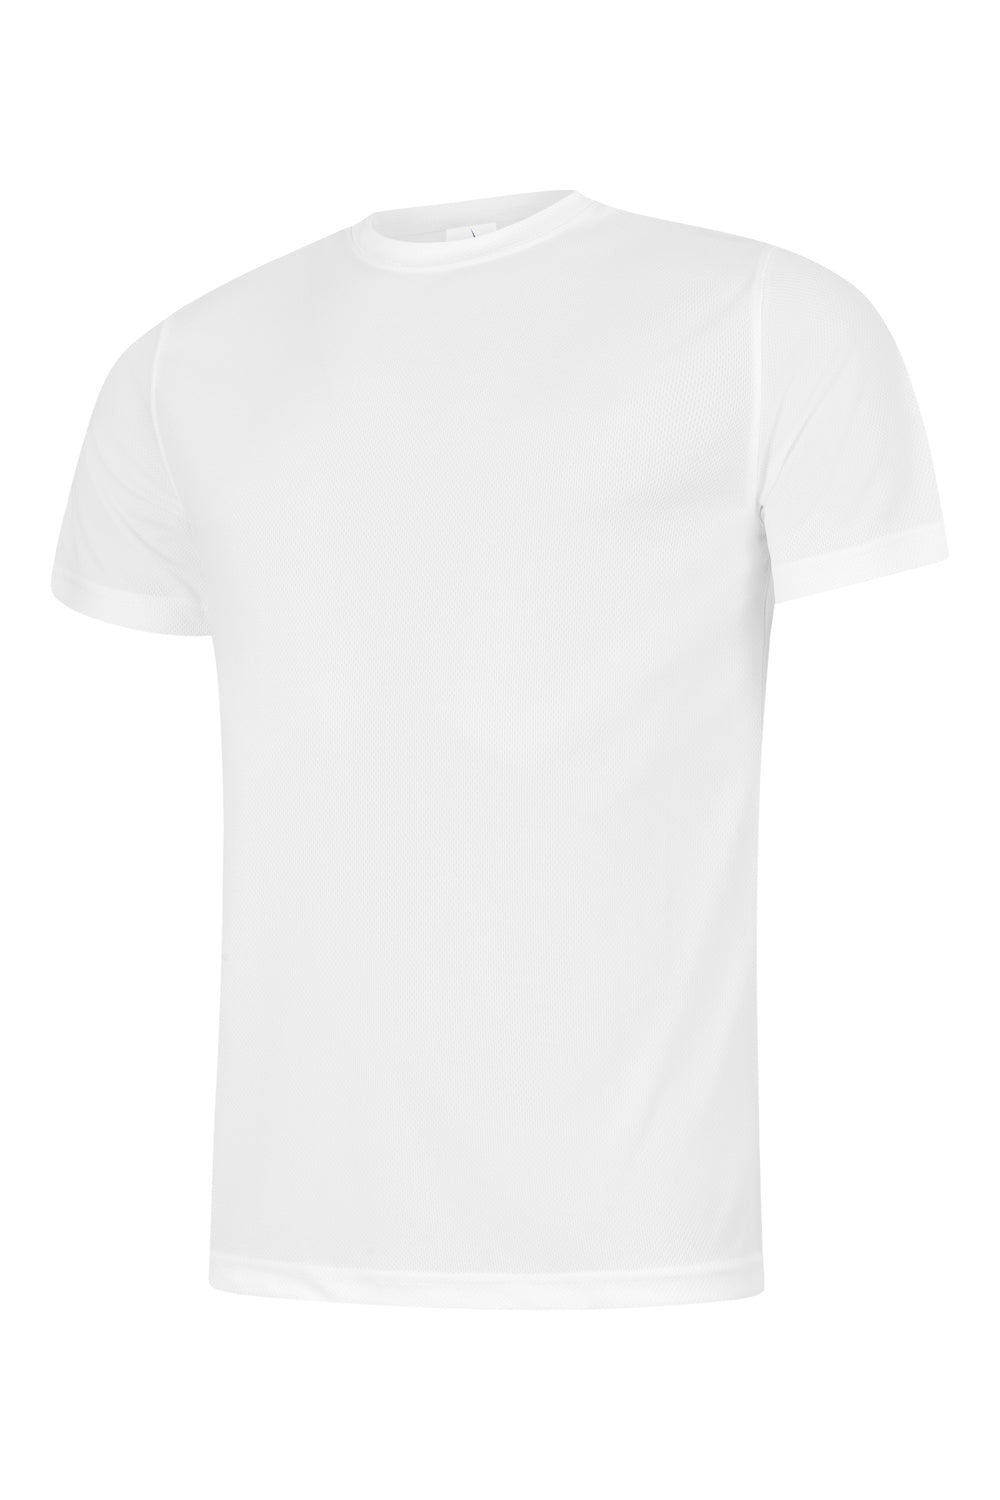 mens_ultra_cool_t_shirt_white